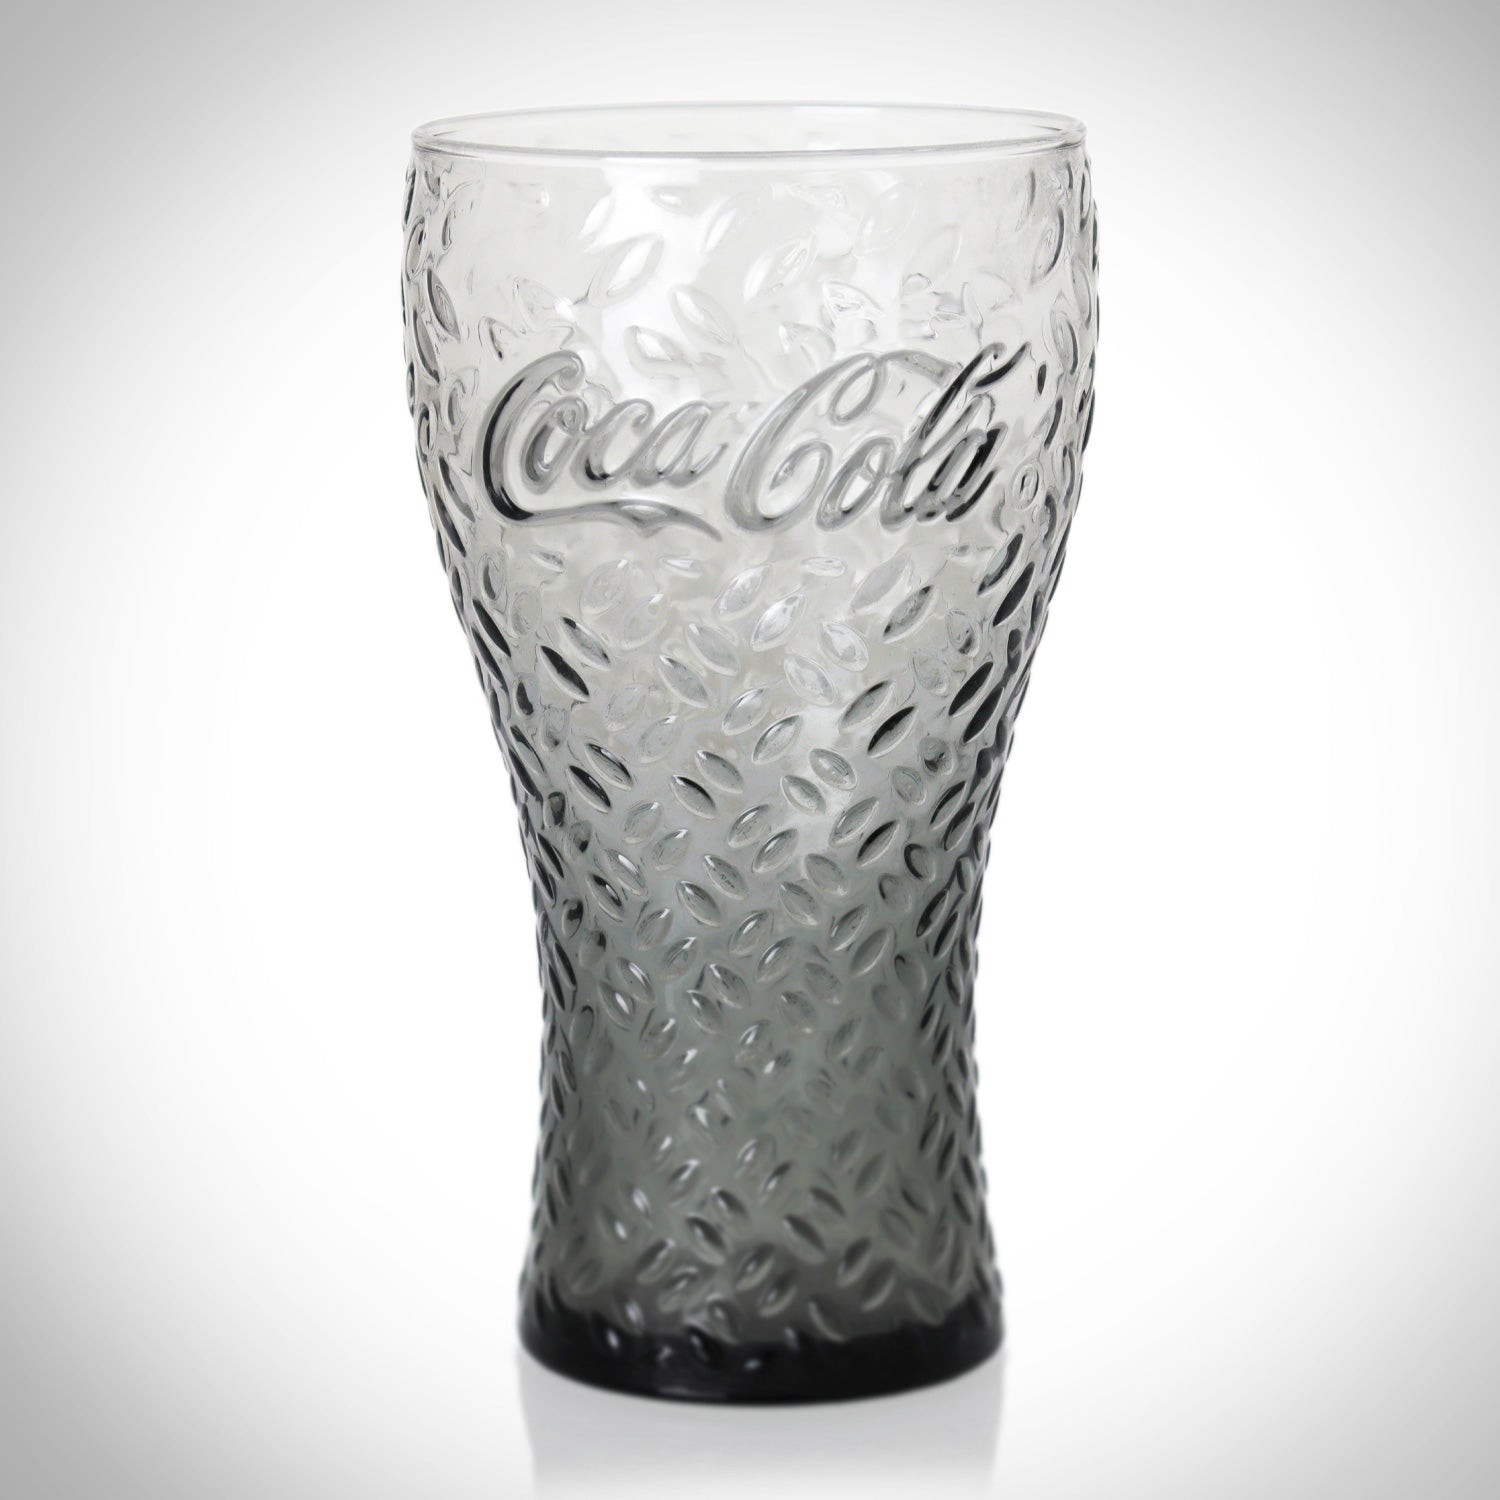 Coca Cola - Vintage Embossed Glass Tumbler